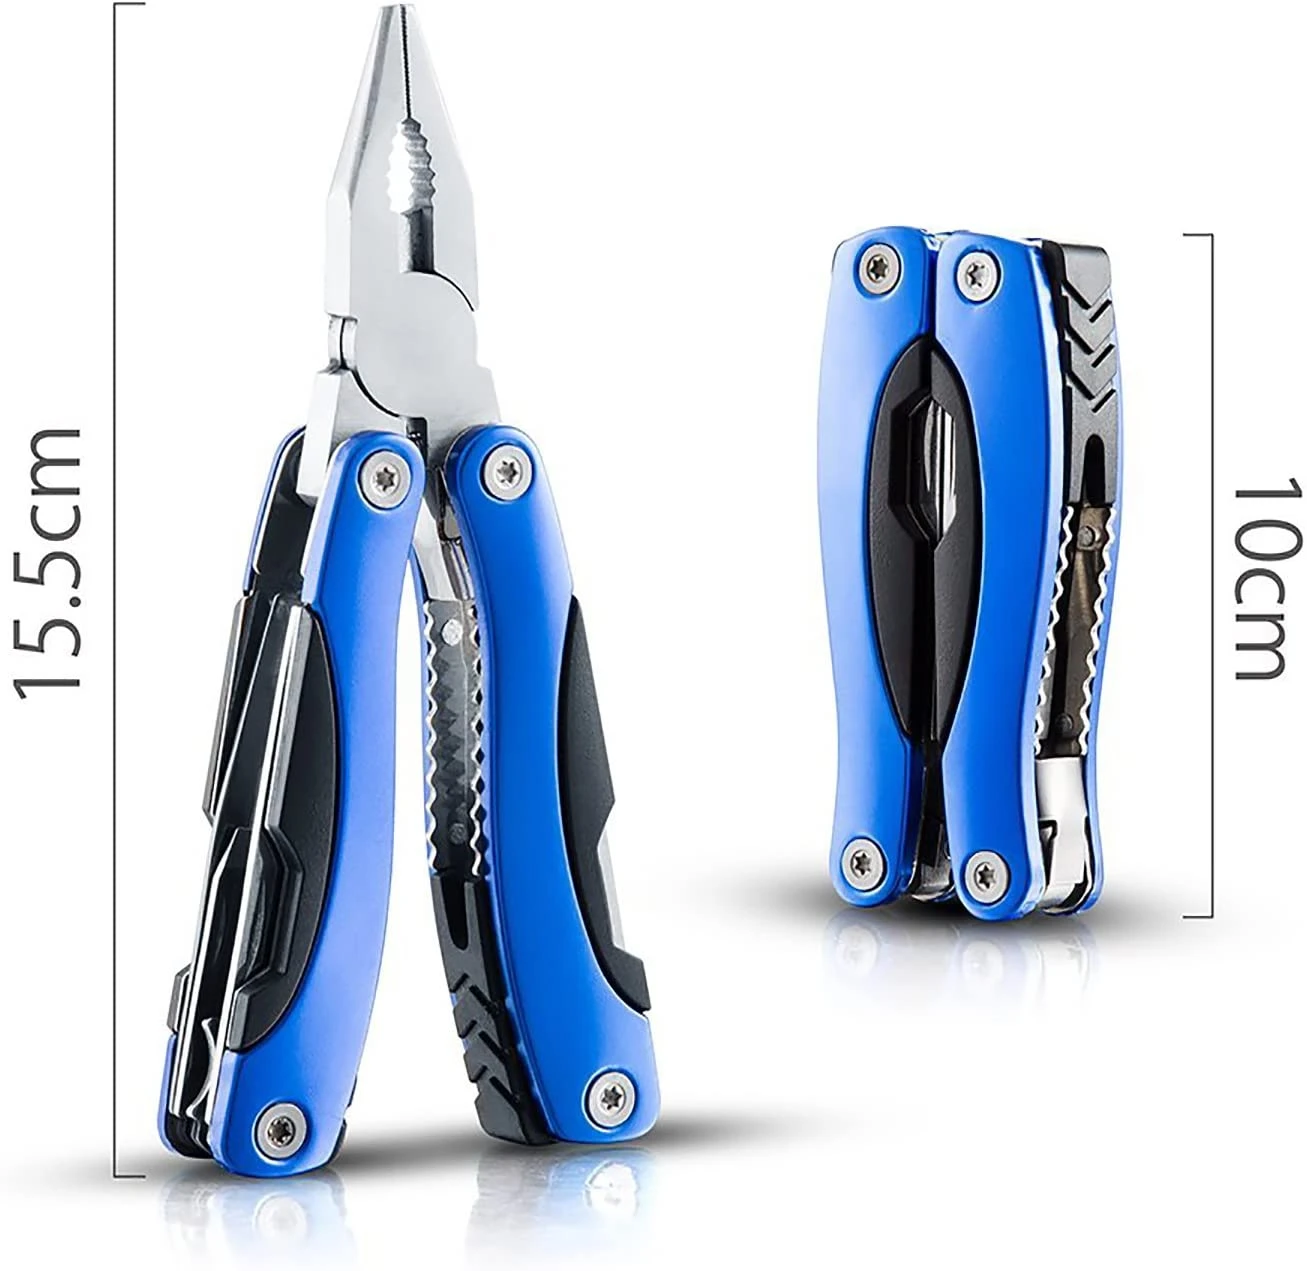 Multitool Knife. 15 in 1 Portable Pocket pliers Multifunctional Multi Tool. Folding Saw, Wire Cutter, Pliers, Sheath